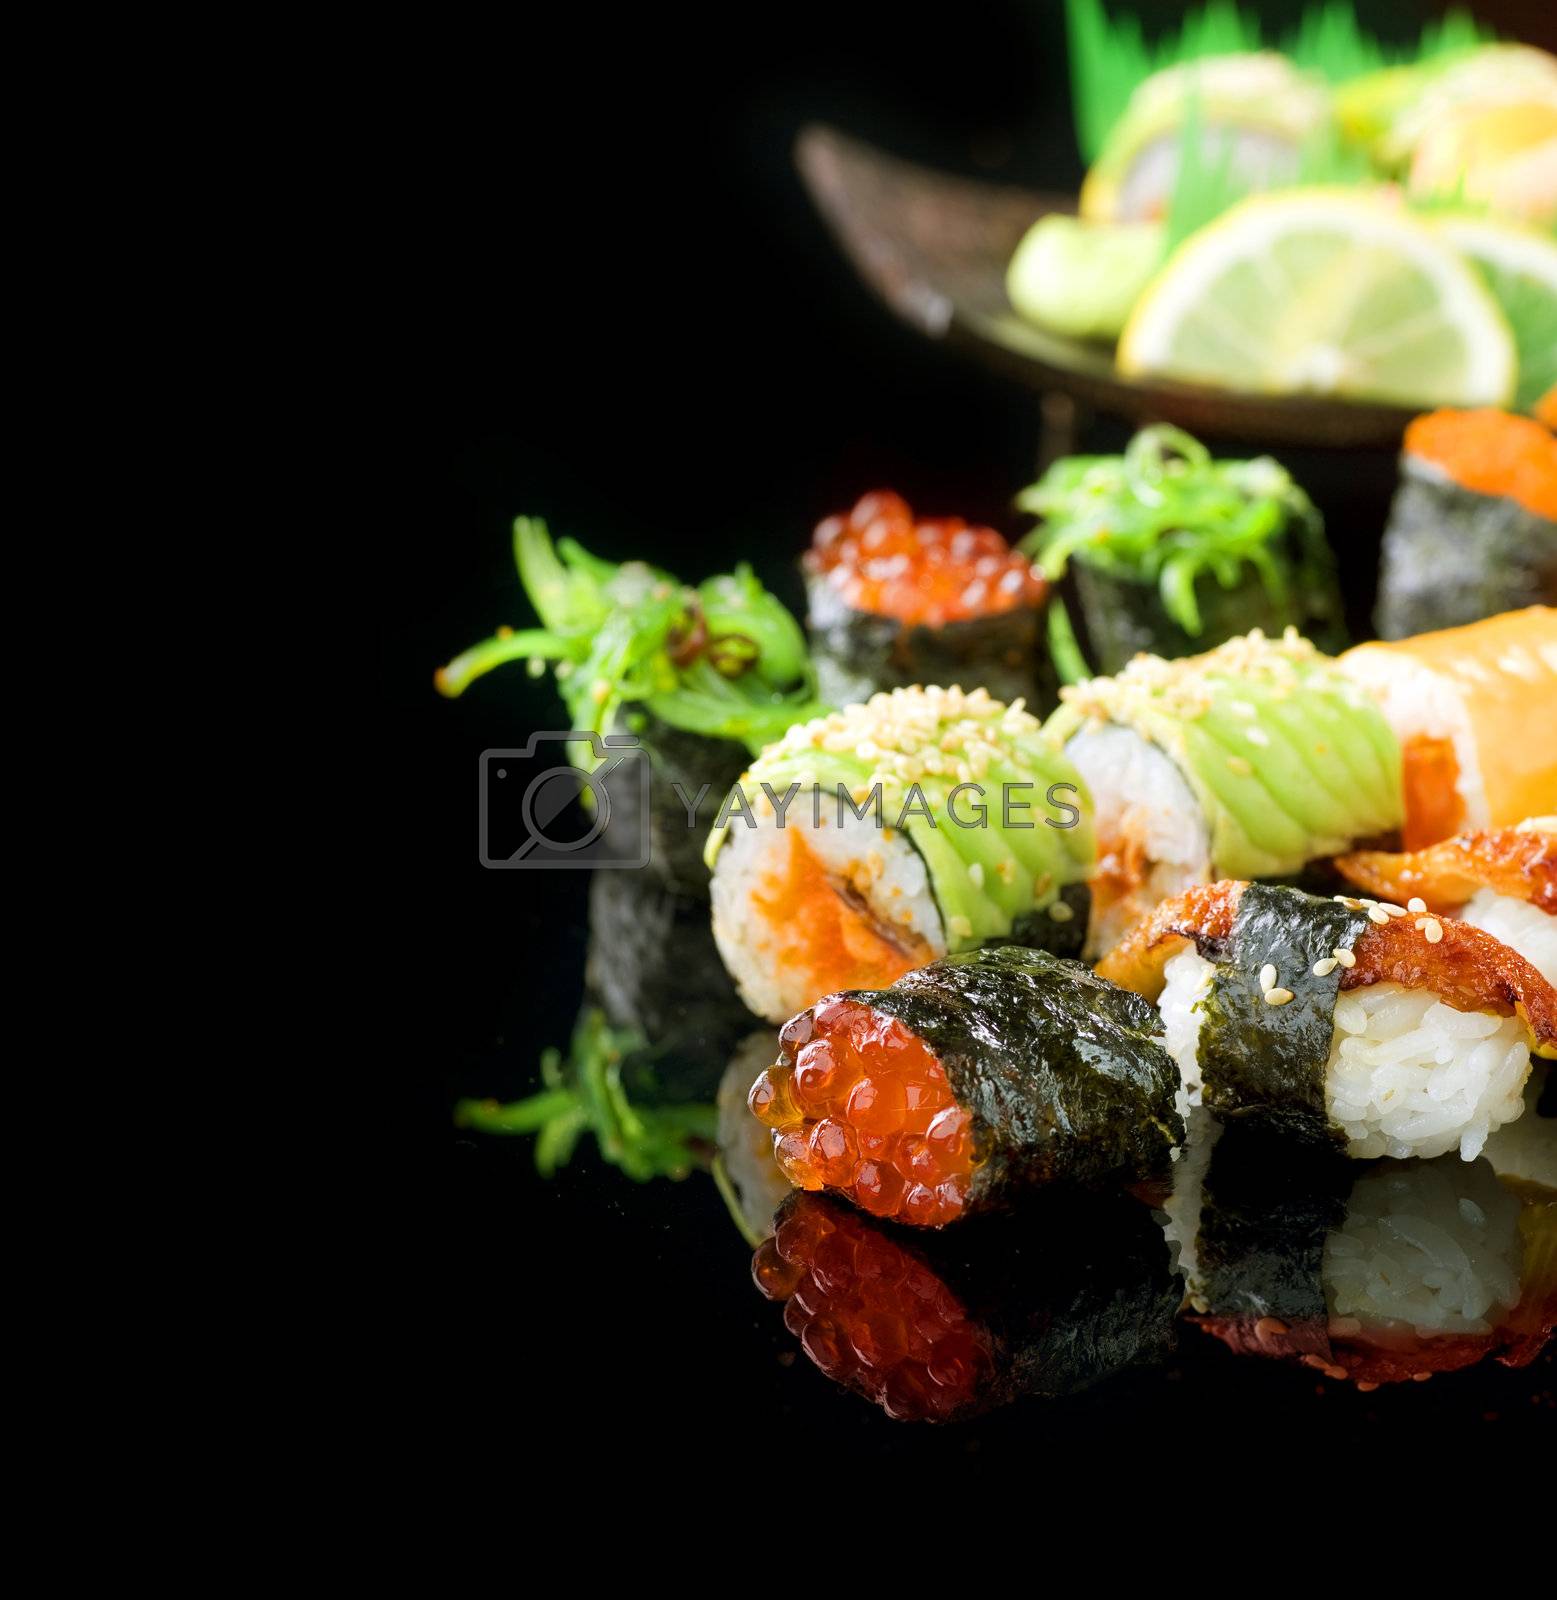 Royalty free image of Sushi set by SubbotinaA